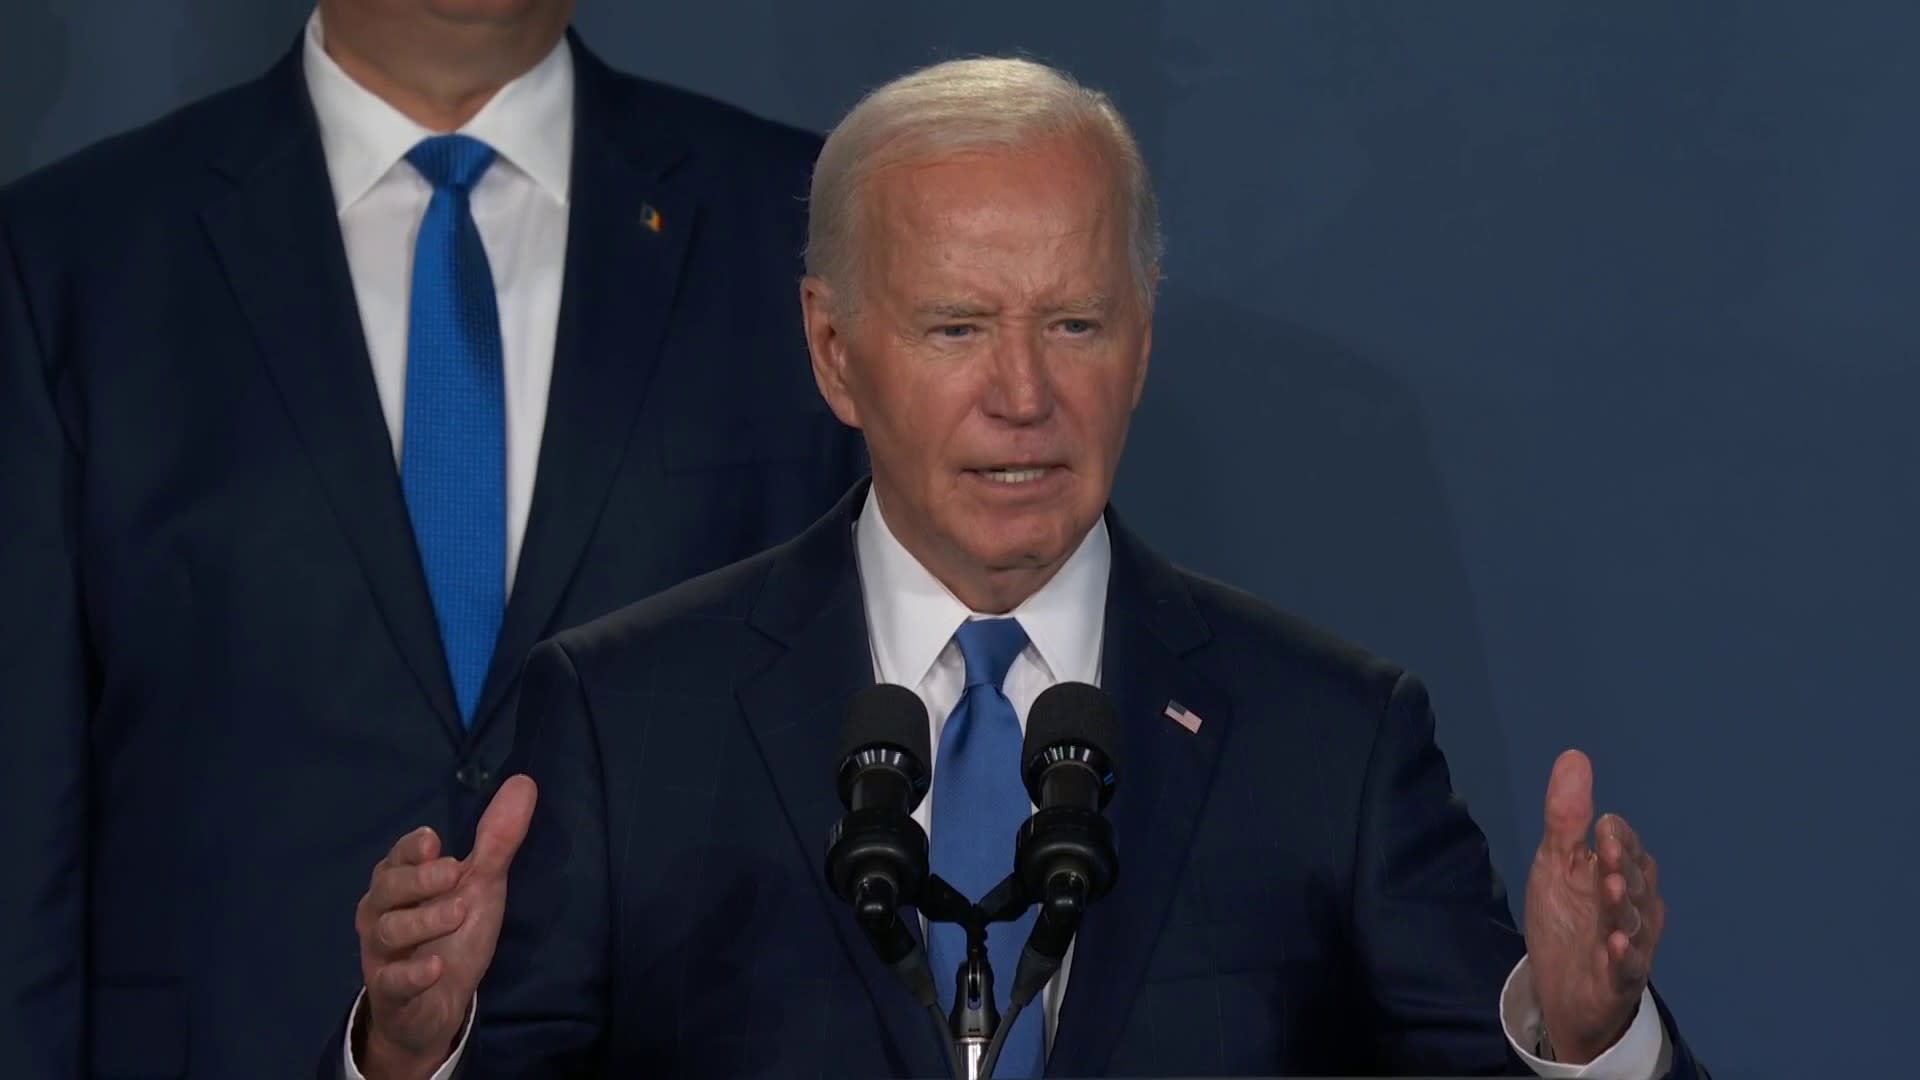 President Joe Biden mistakenly introduces Ukrainian President Zelenskyy as 'President Putin'